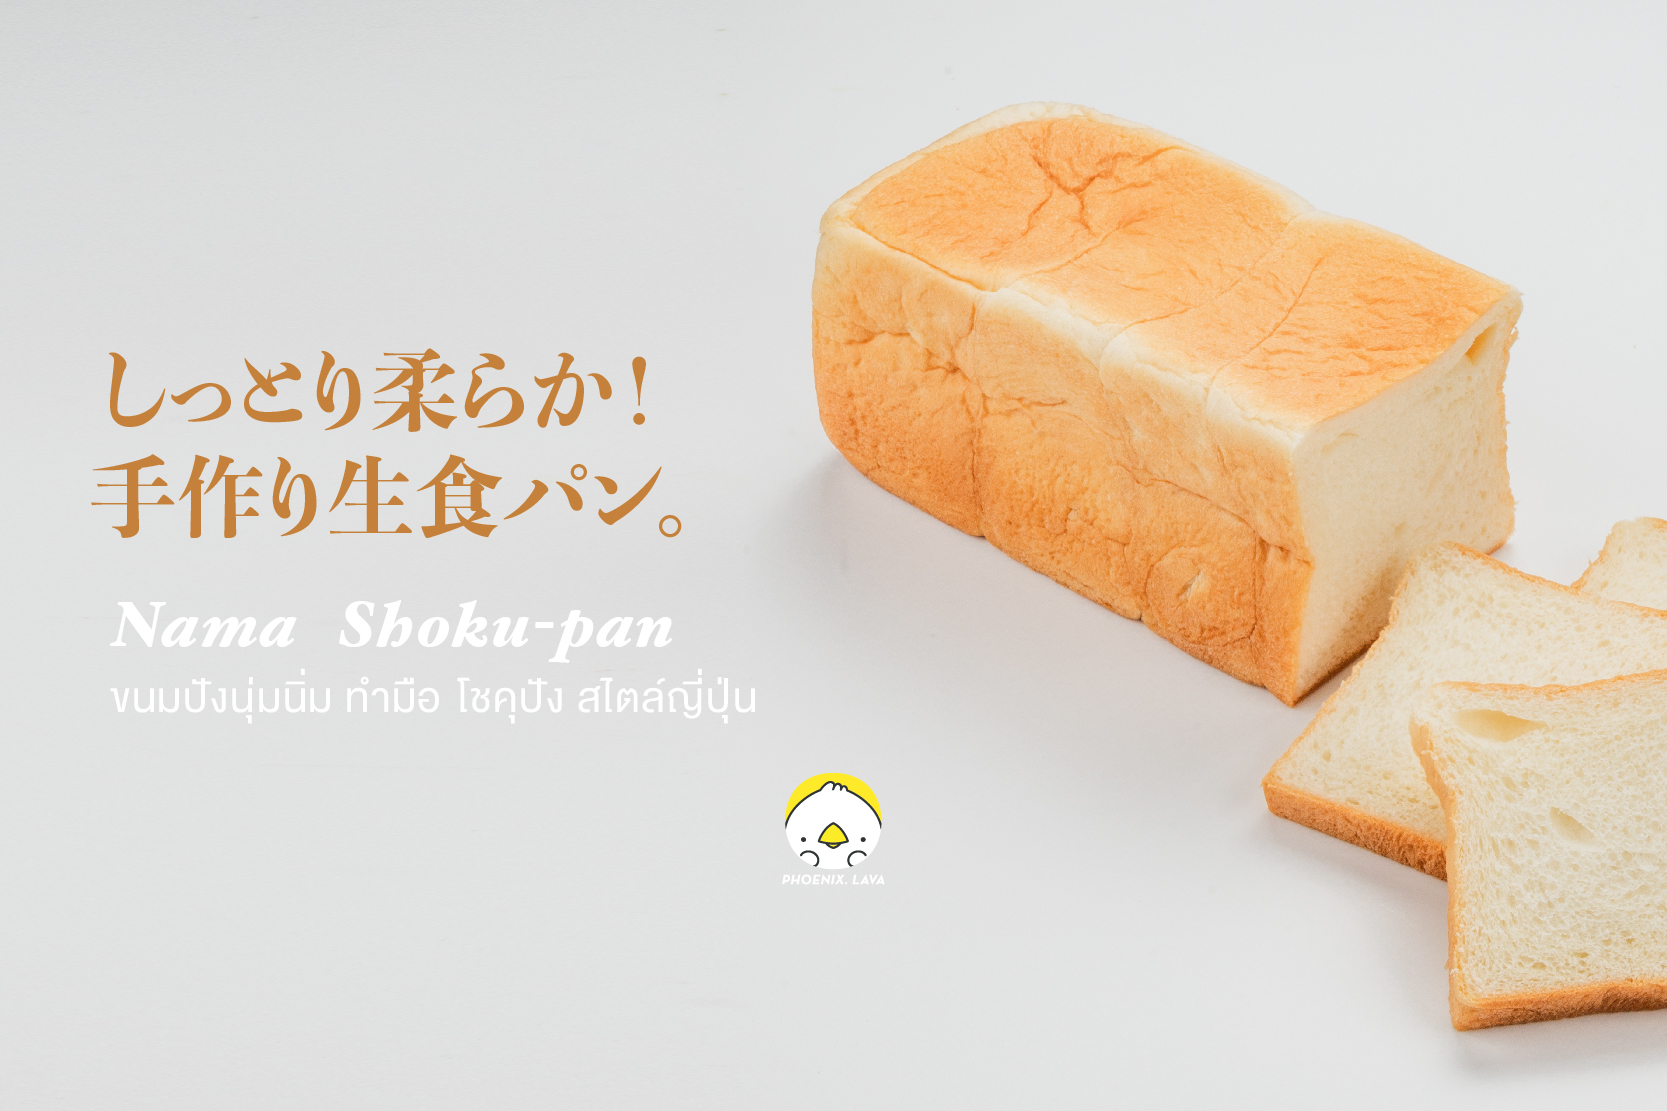 shokupan คือ, ขนมปังญี่ปุ่น